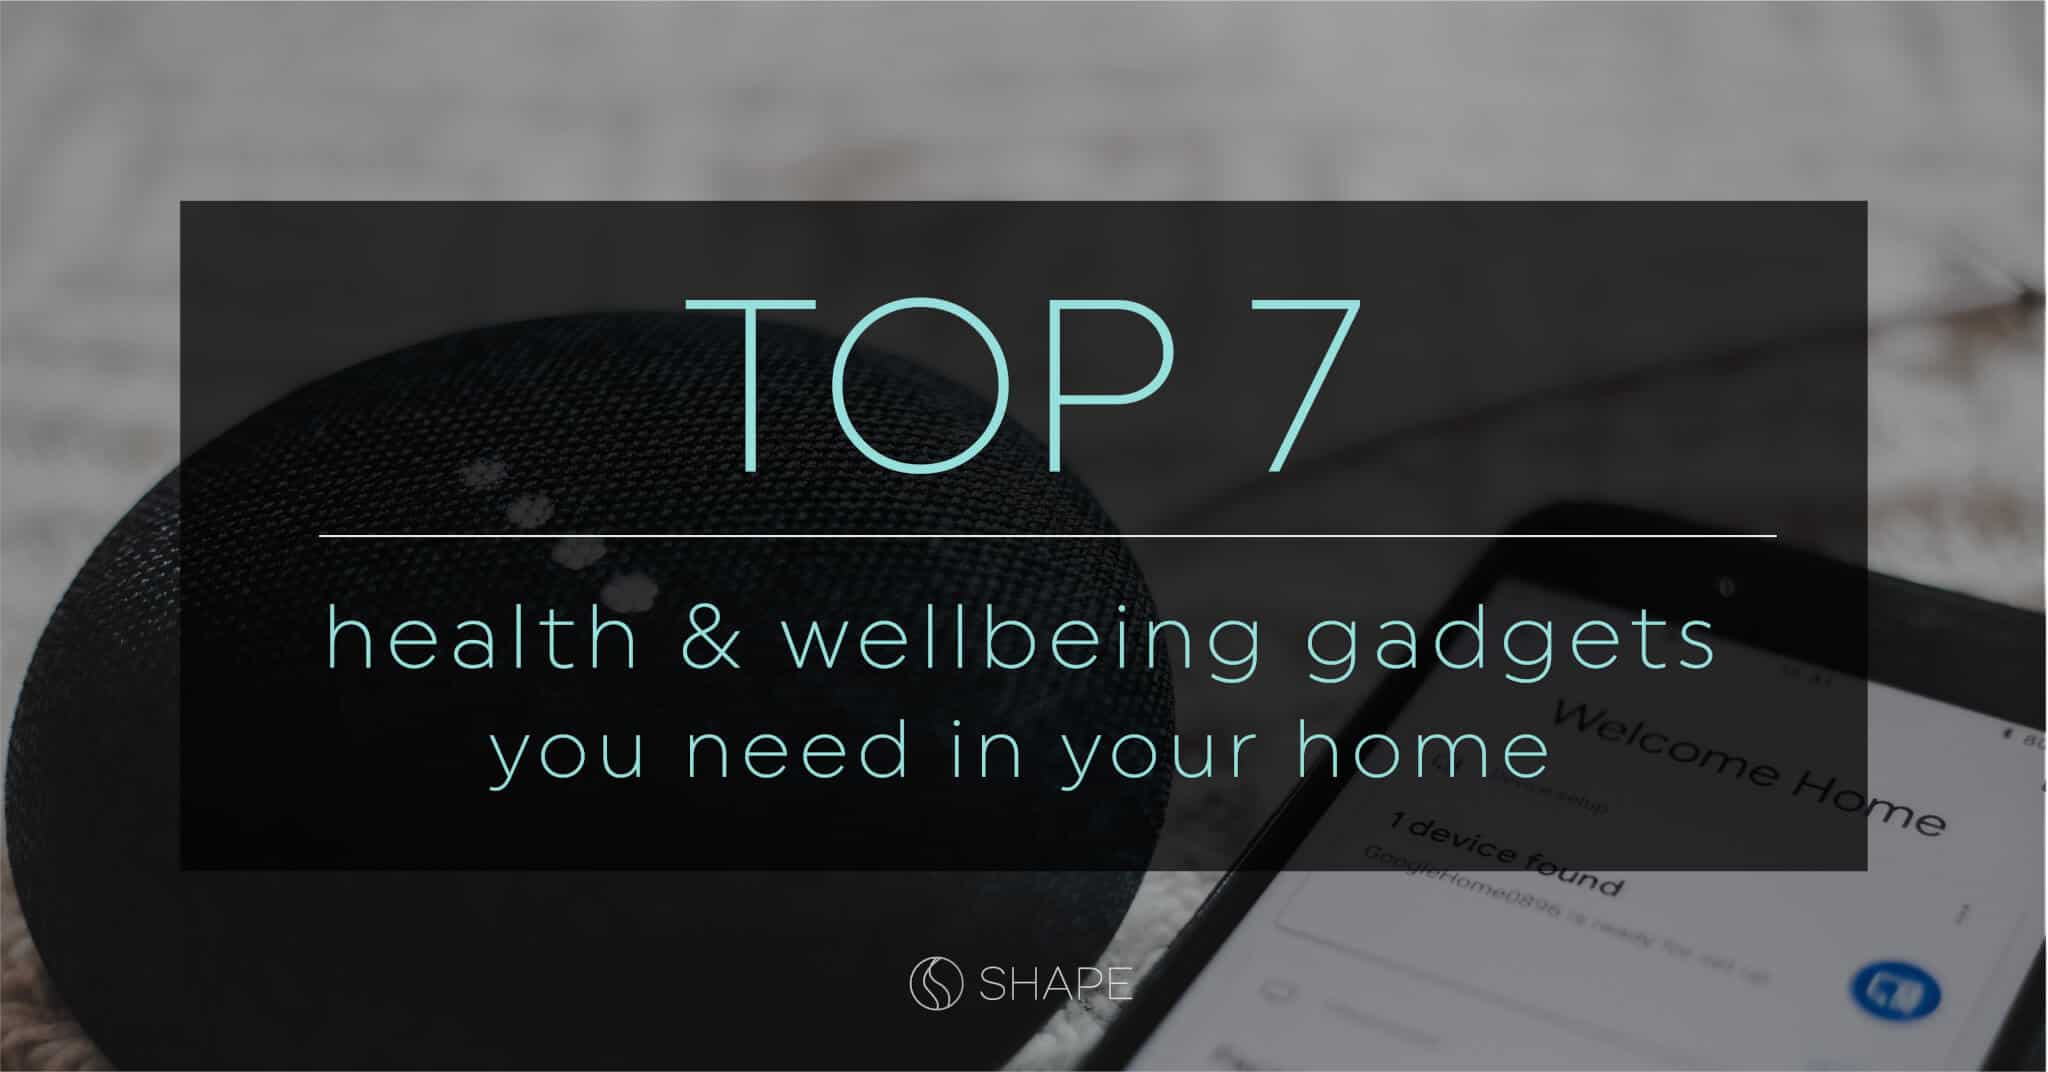 https://cdn.shpe.us/wp-content/uploads/sites/5/2018/09/top-7-health-wellbeing-gadgets-01.jpg